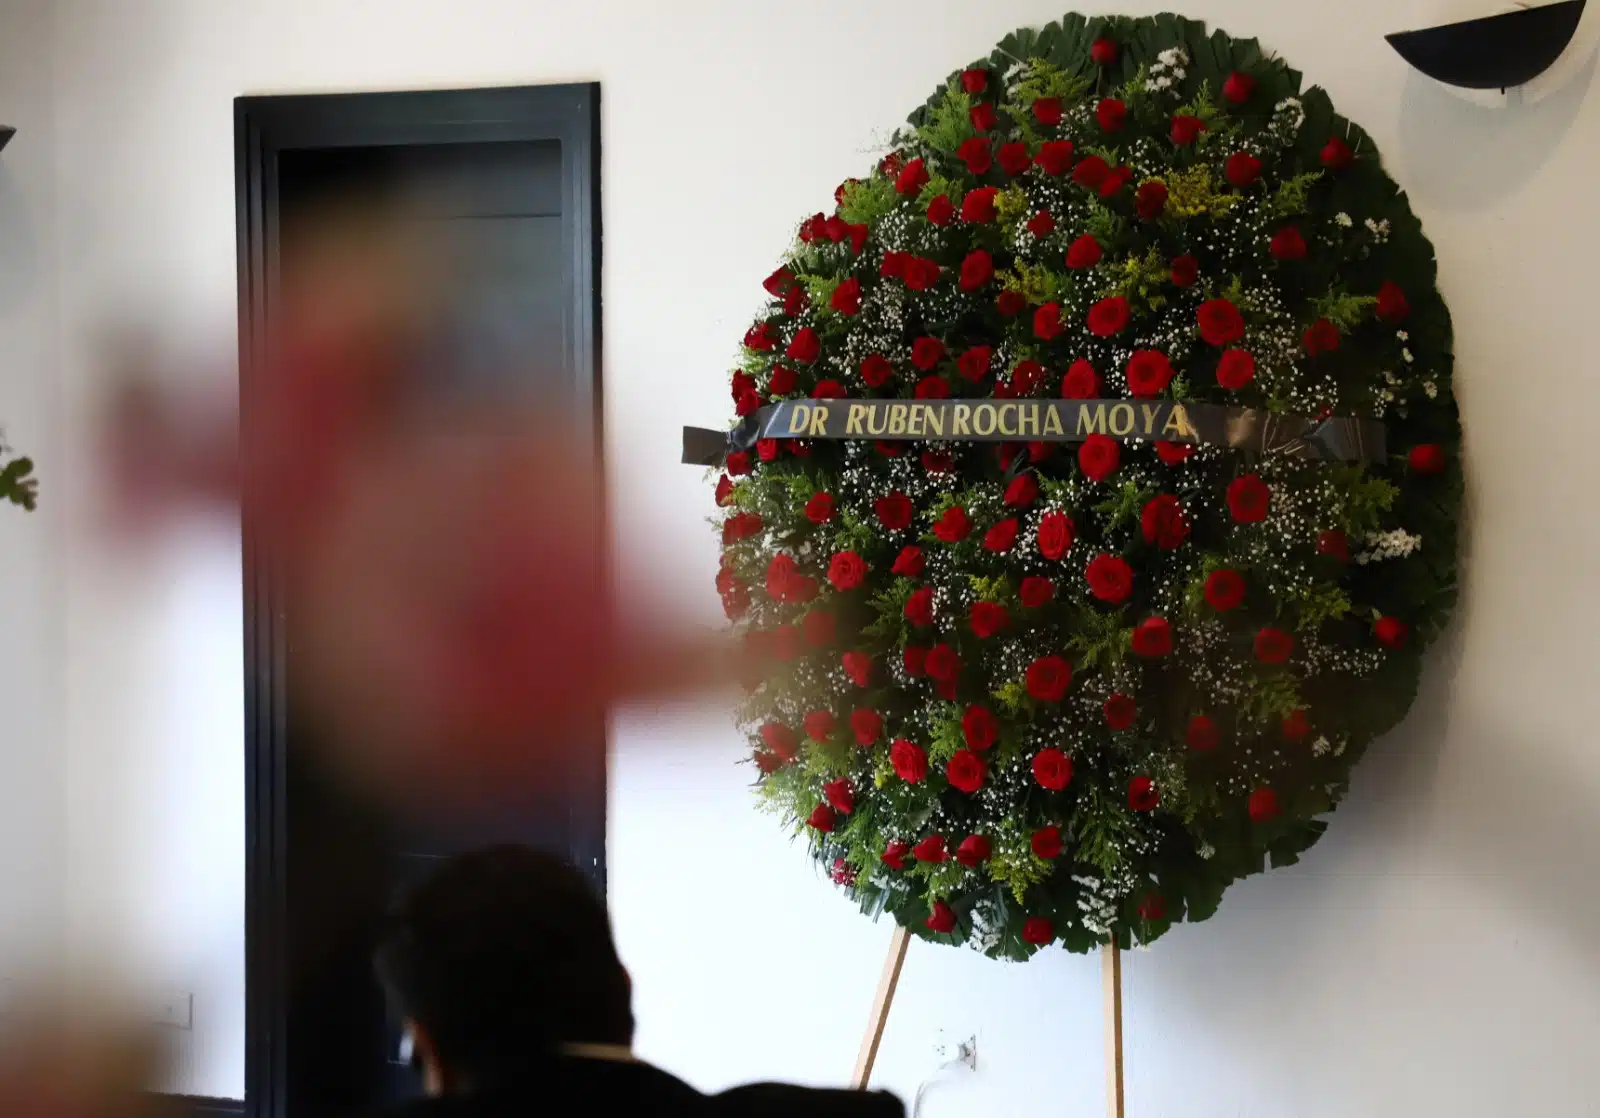 El gobernador Rubén Rocha Moya envió una gran corona de rosas rojas en el funeral de “La Gilbertona”.